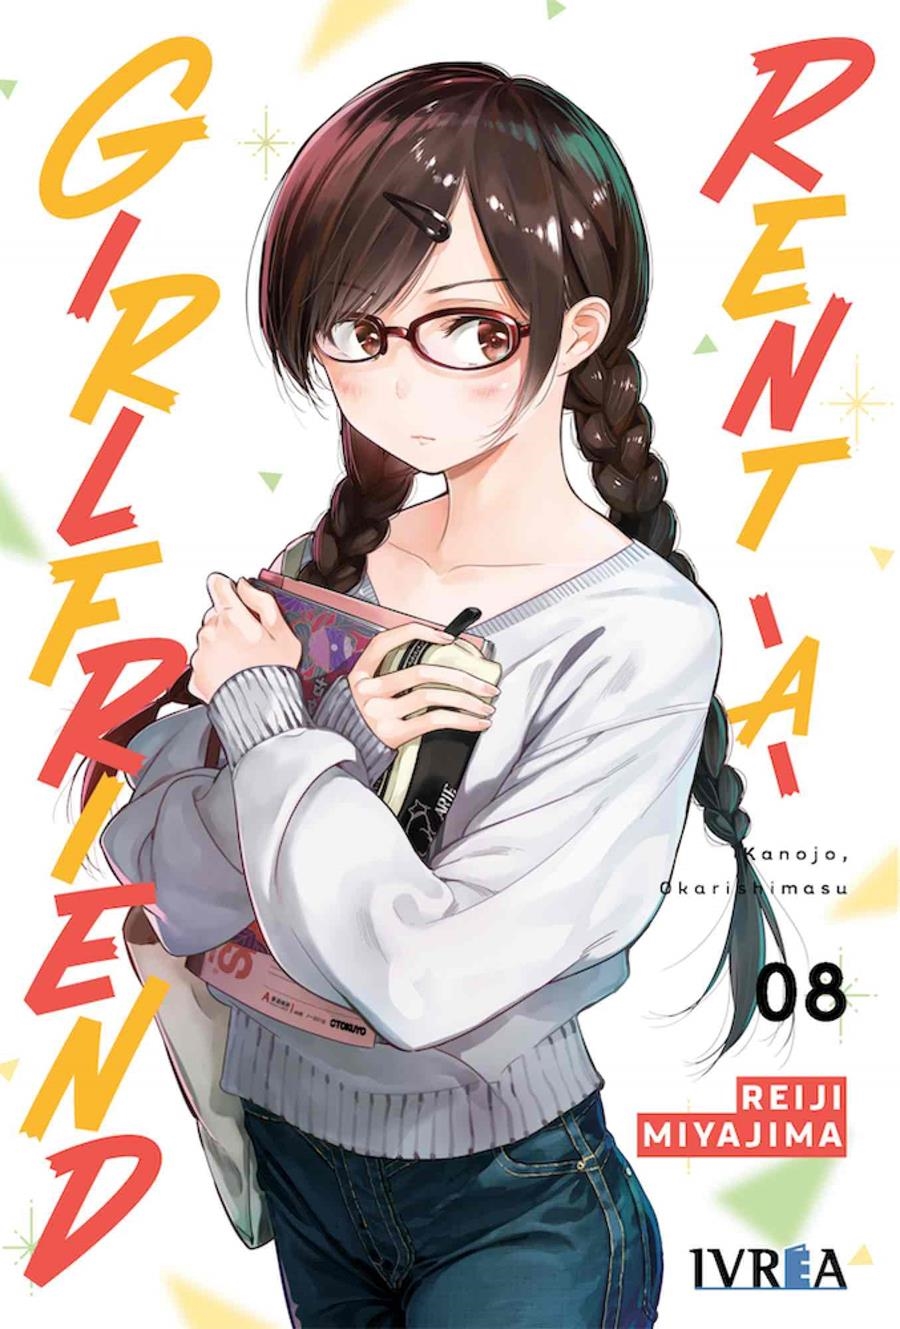 RENT-A-GIRLFRIEND Nº08 [RUSTICA] | MIYAJIMA, REIJI | Akira Comics  - libreria donde comprar comics, juegos y libros online